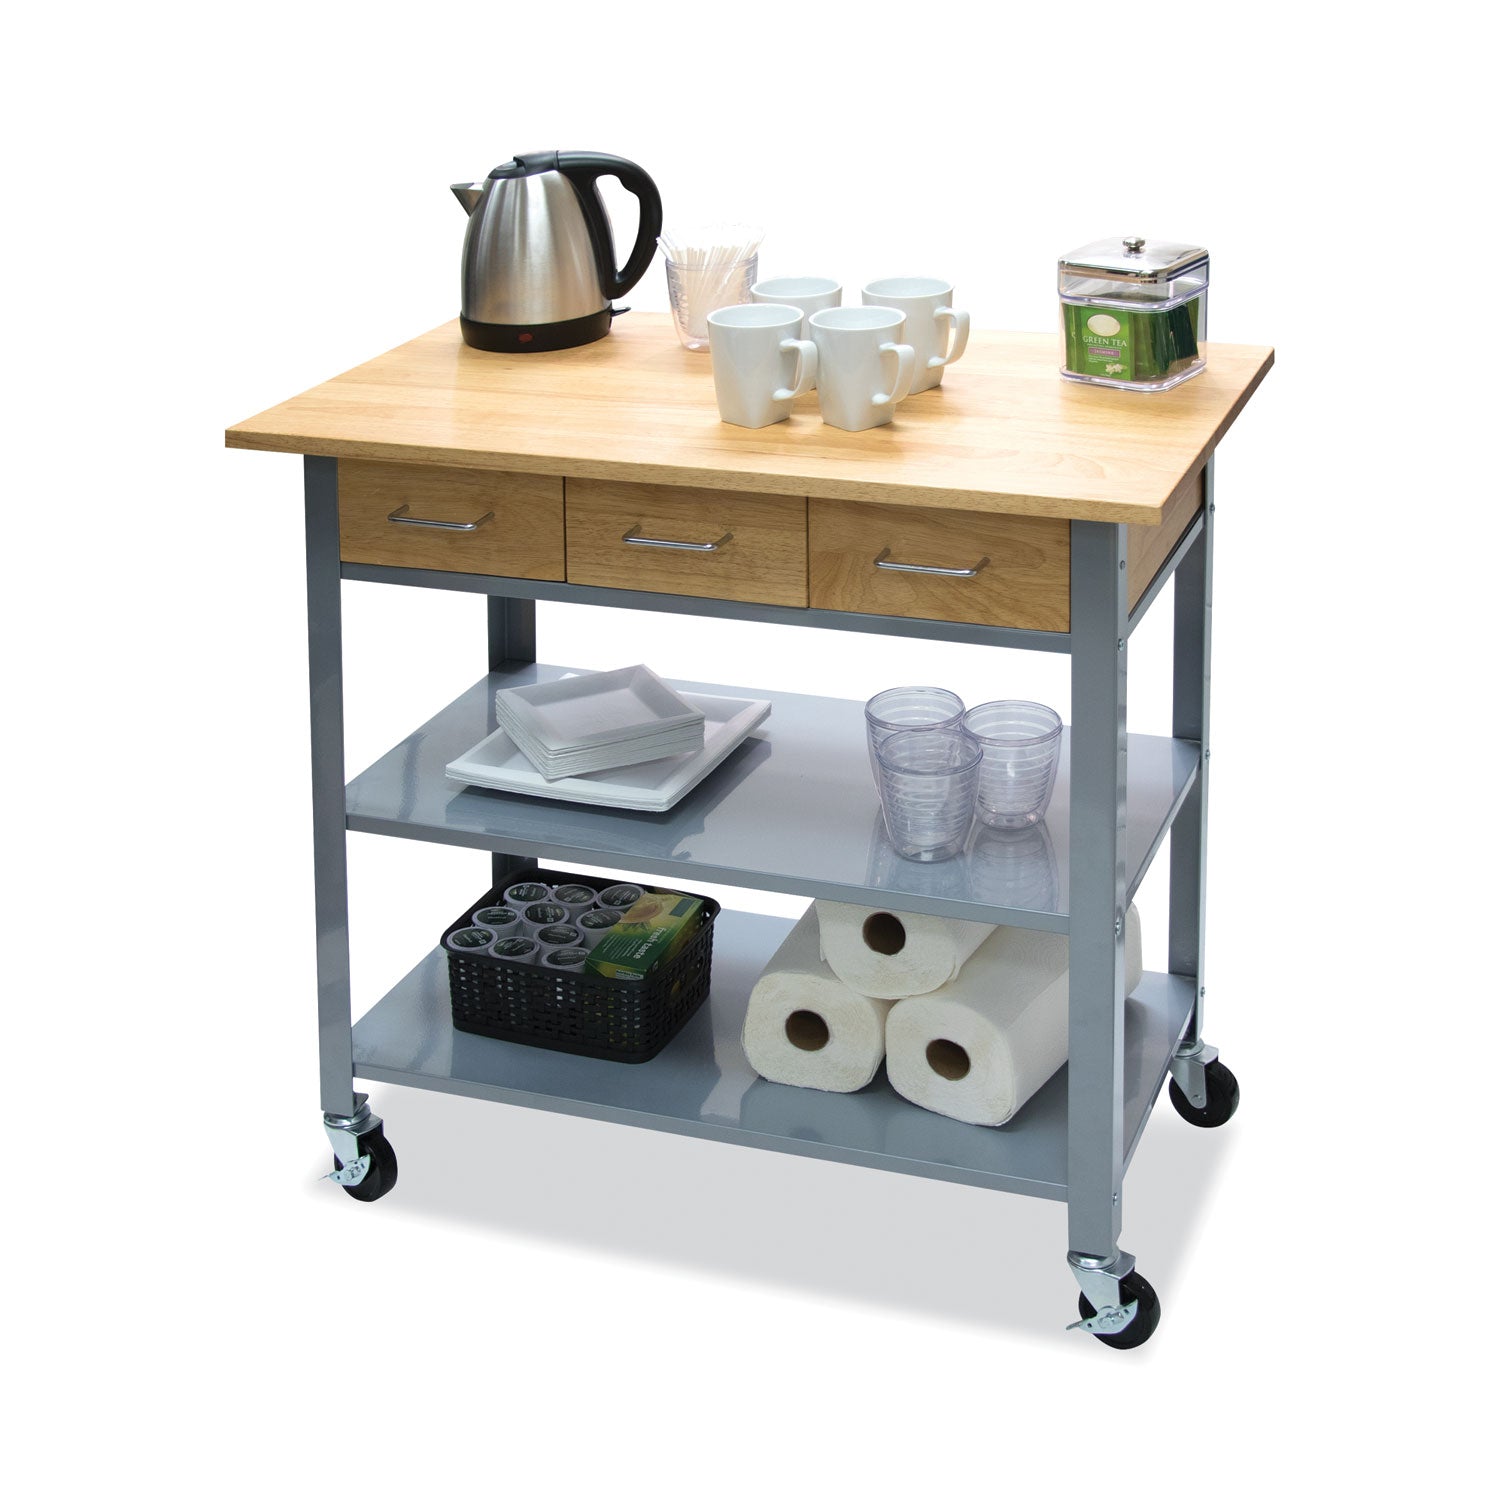 Countertop Serving Cart, Wood, 3 Shelves, 3 Drawers, 35.5" x 19.75" x 34.25", Oak/Gray - 2